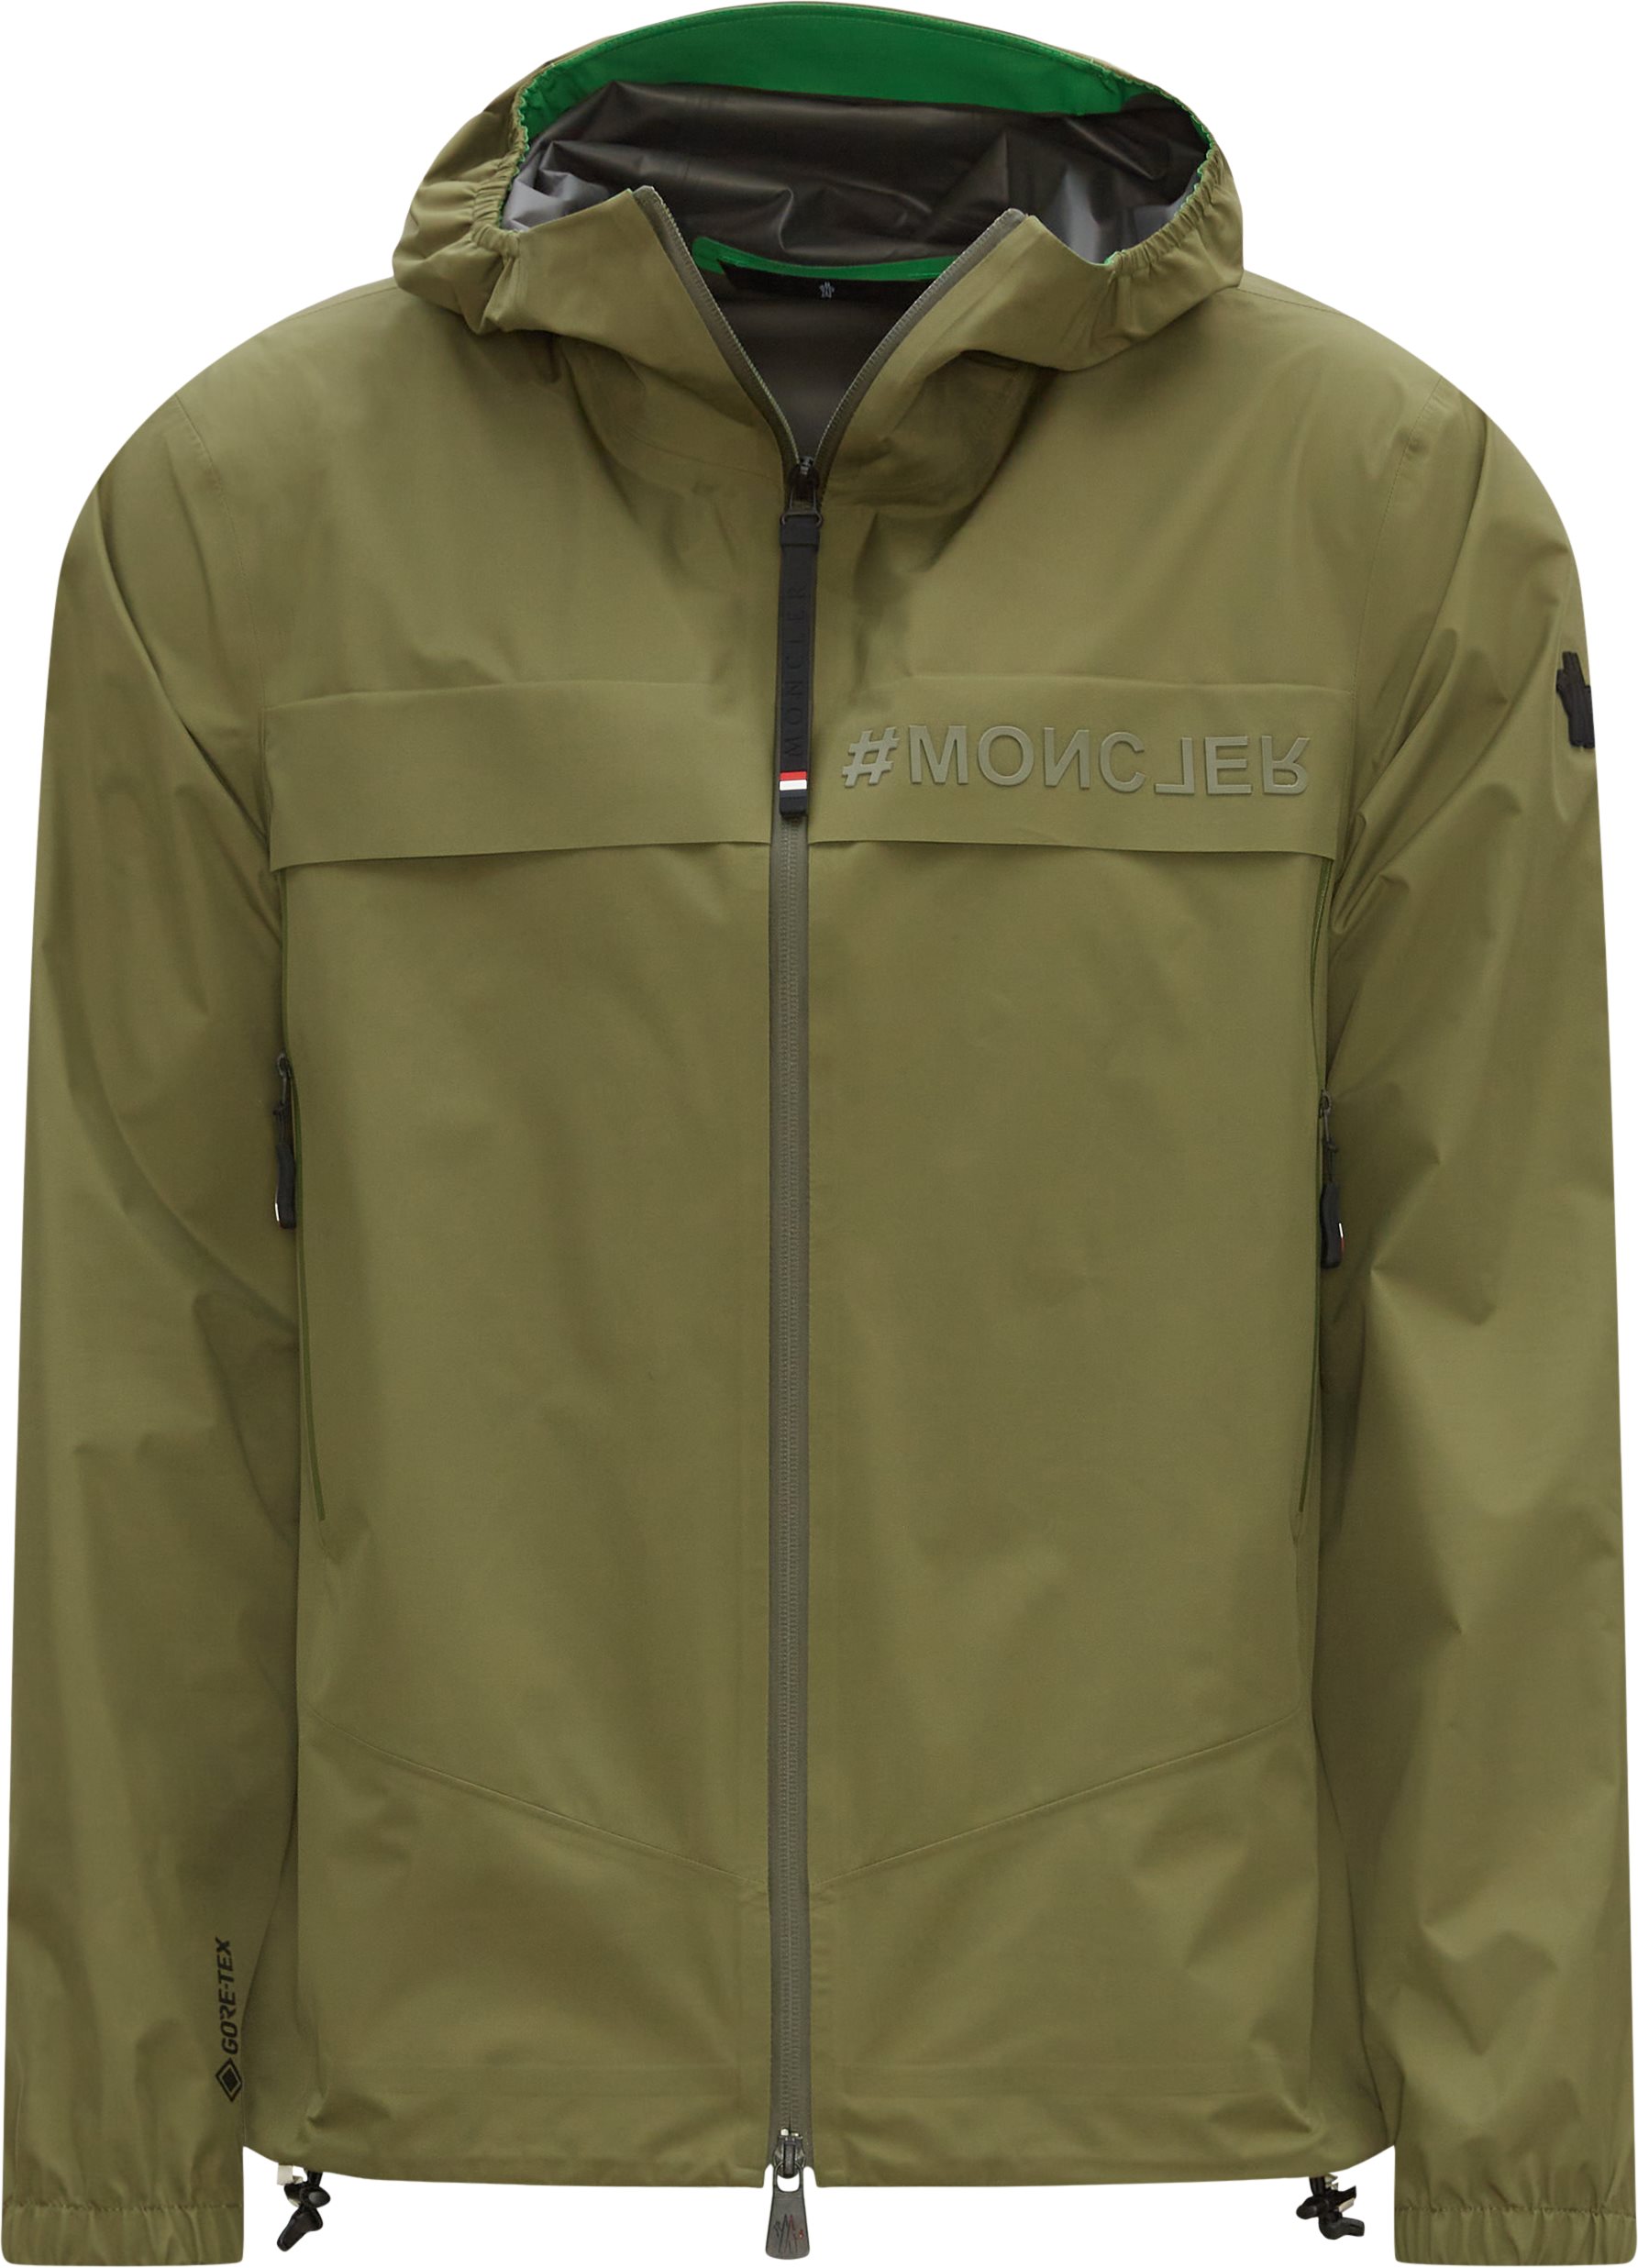 Moncler Grenoble Jackets SHIPTON 1A00015 54AL5  Army